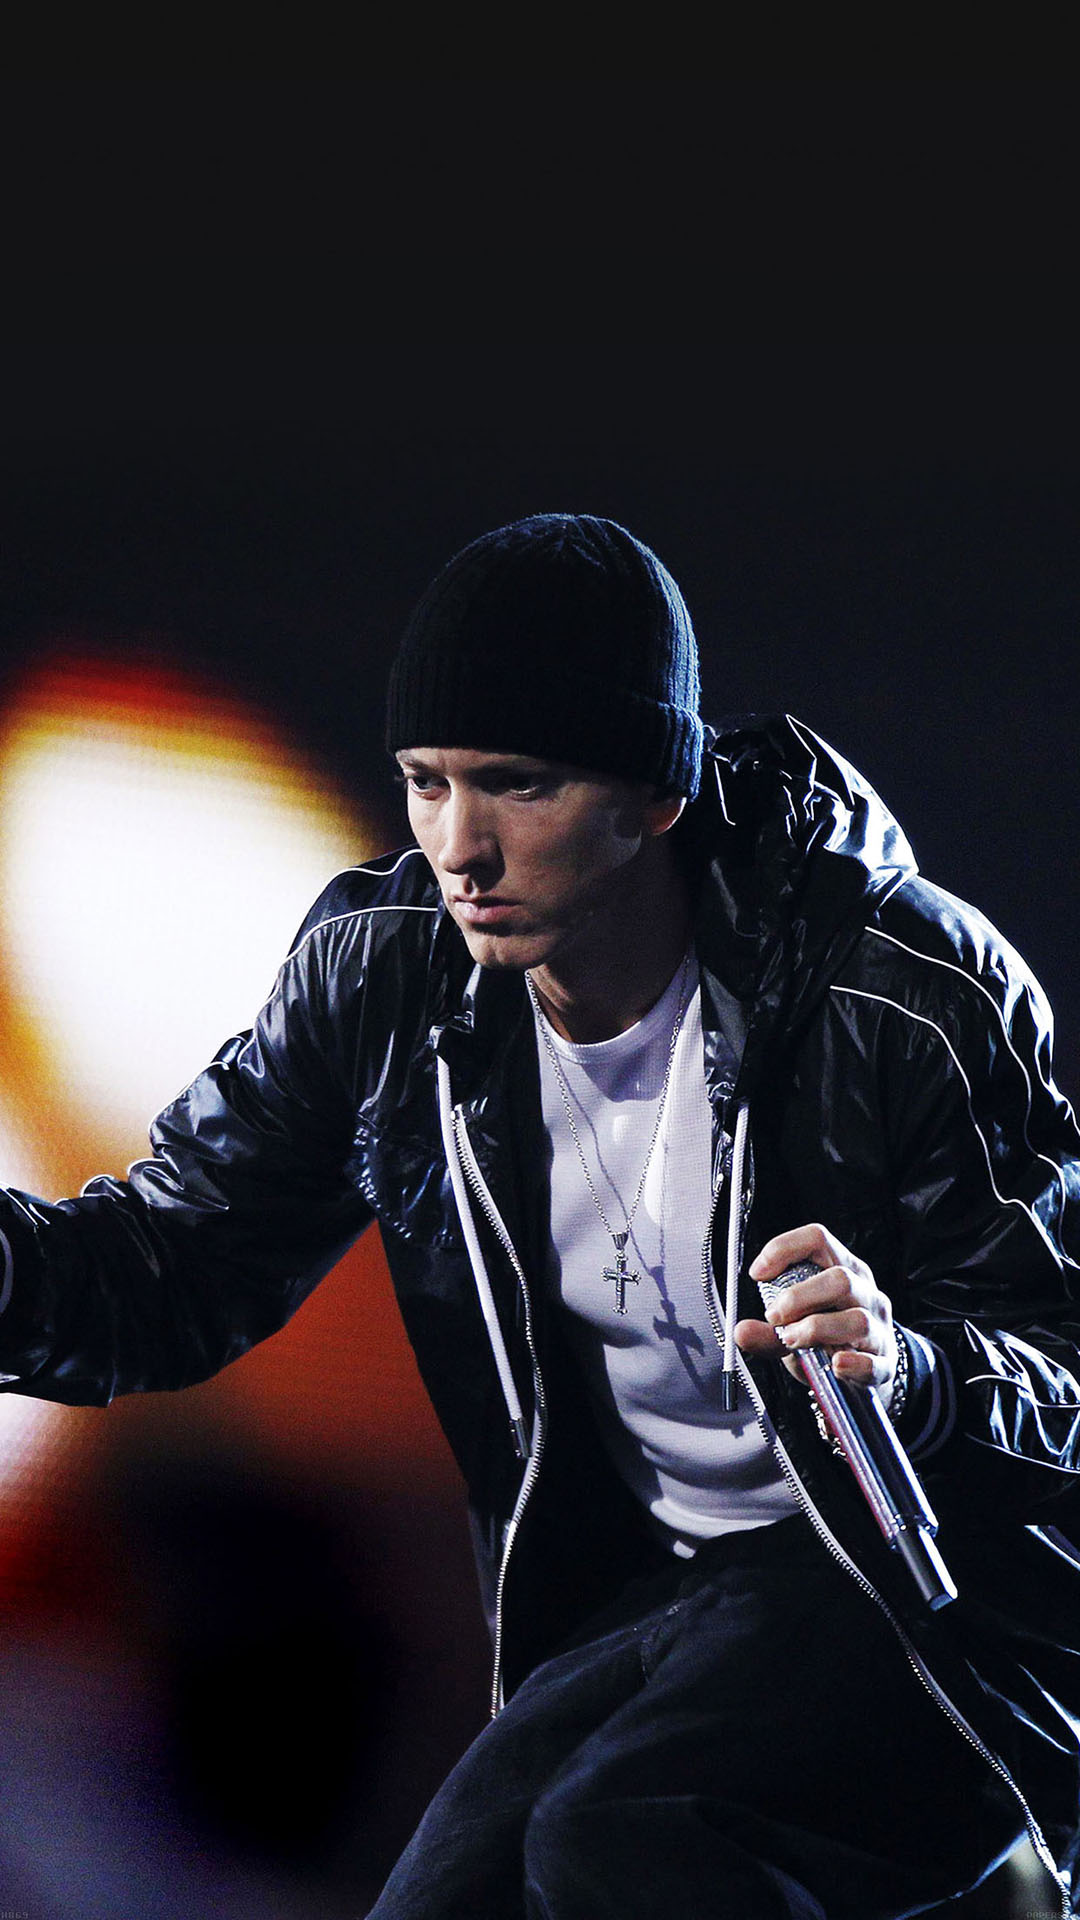 Eminem Wallpaper For iPhone Plus